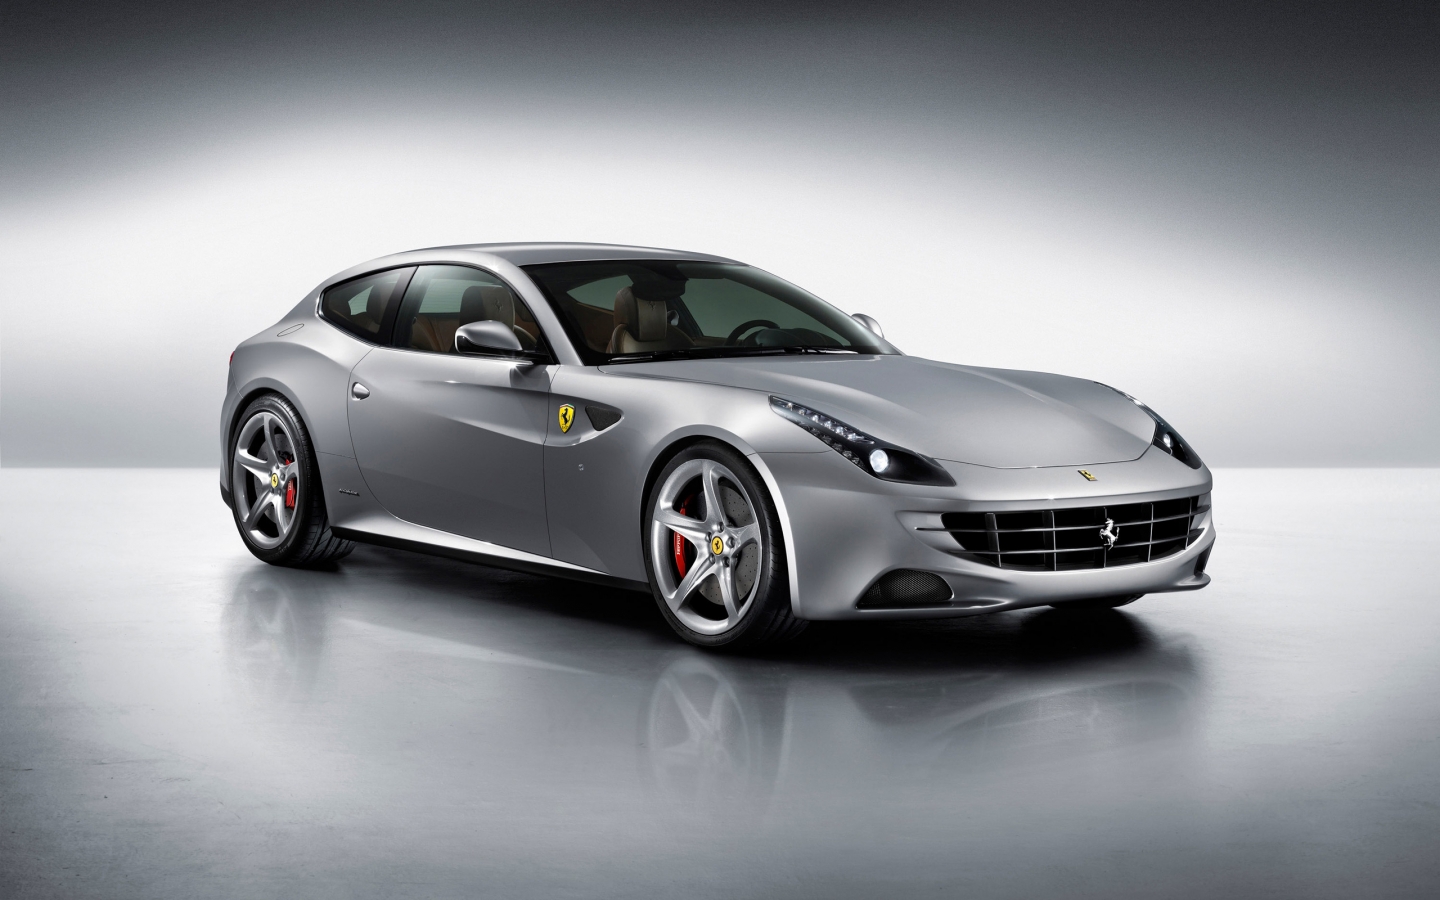 2012 Ferrari FF for 1440 x 900 widescreen resolution